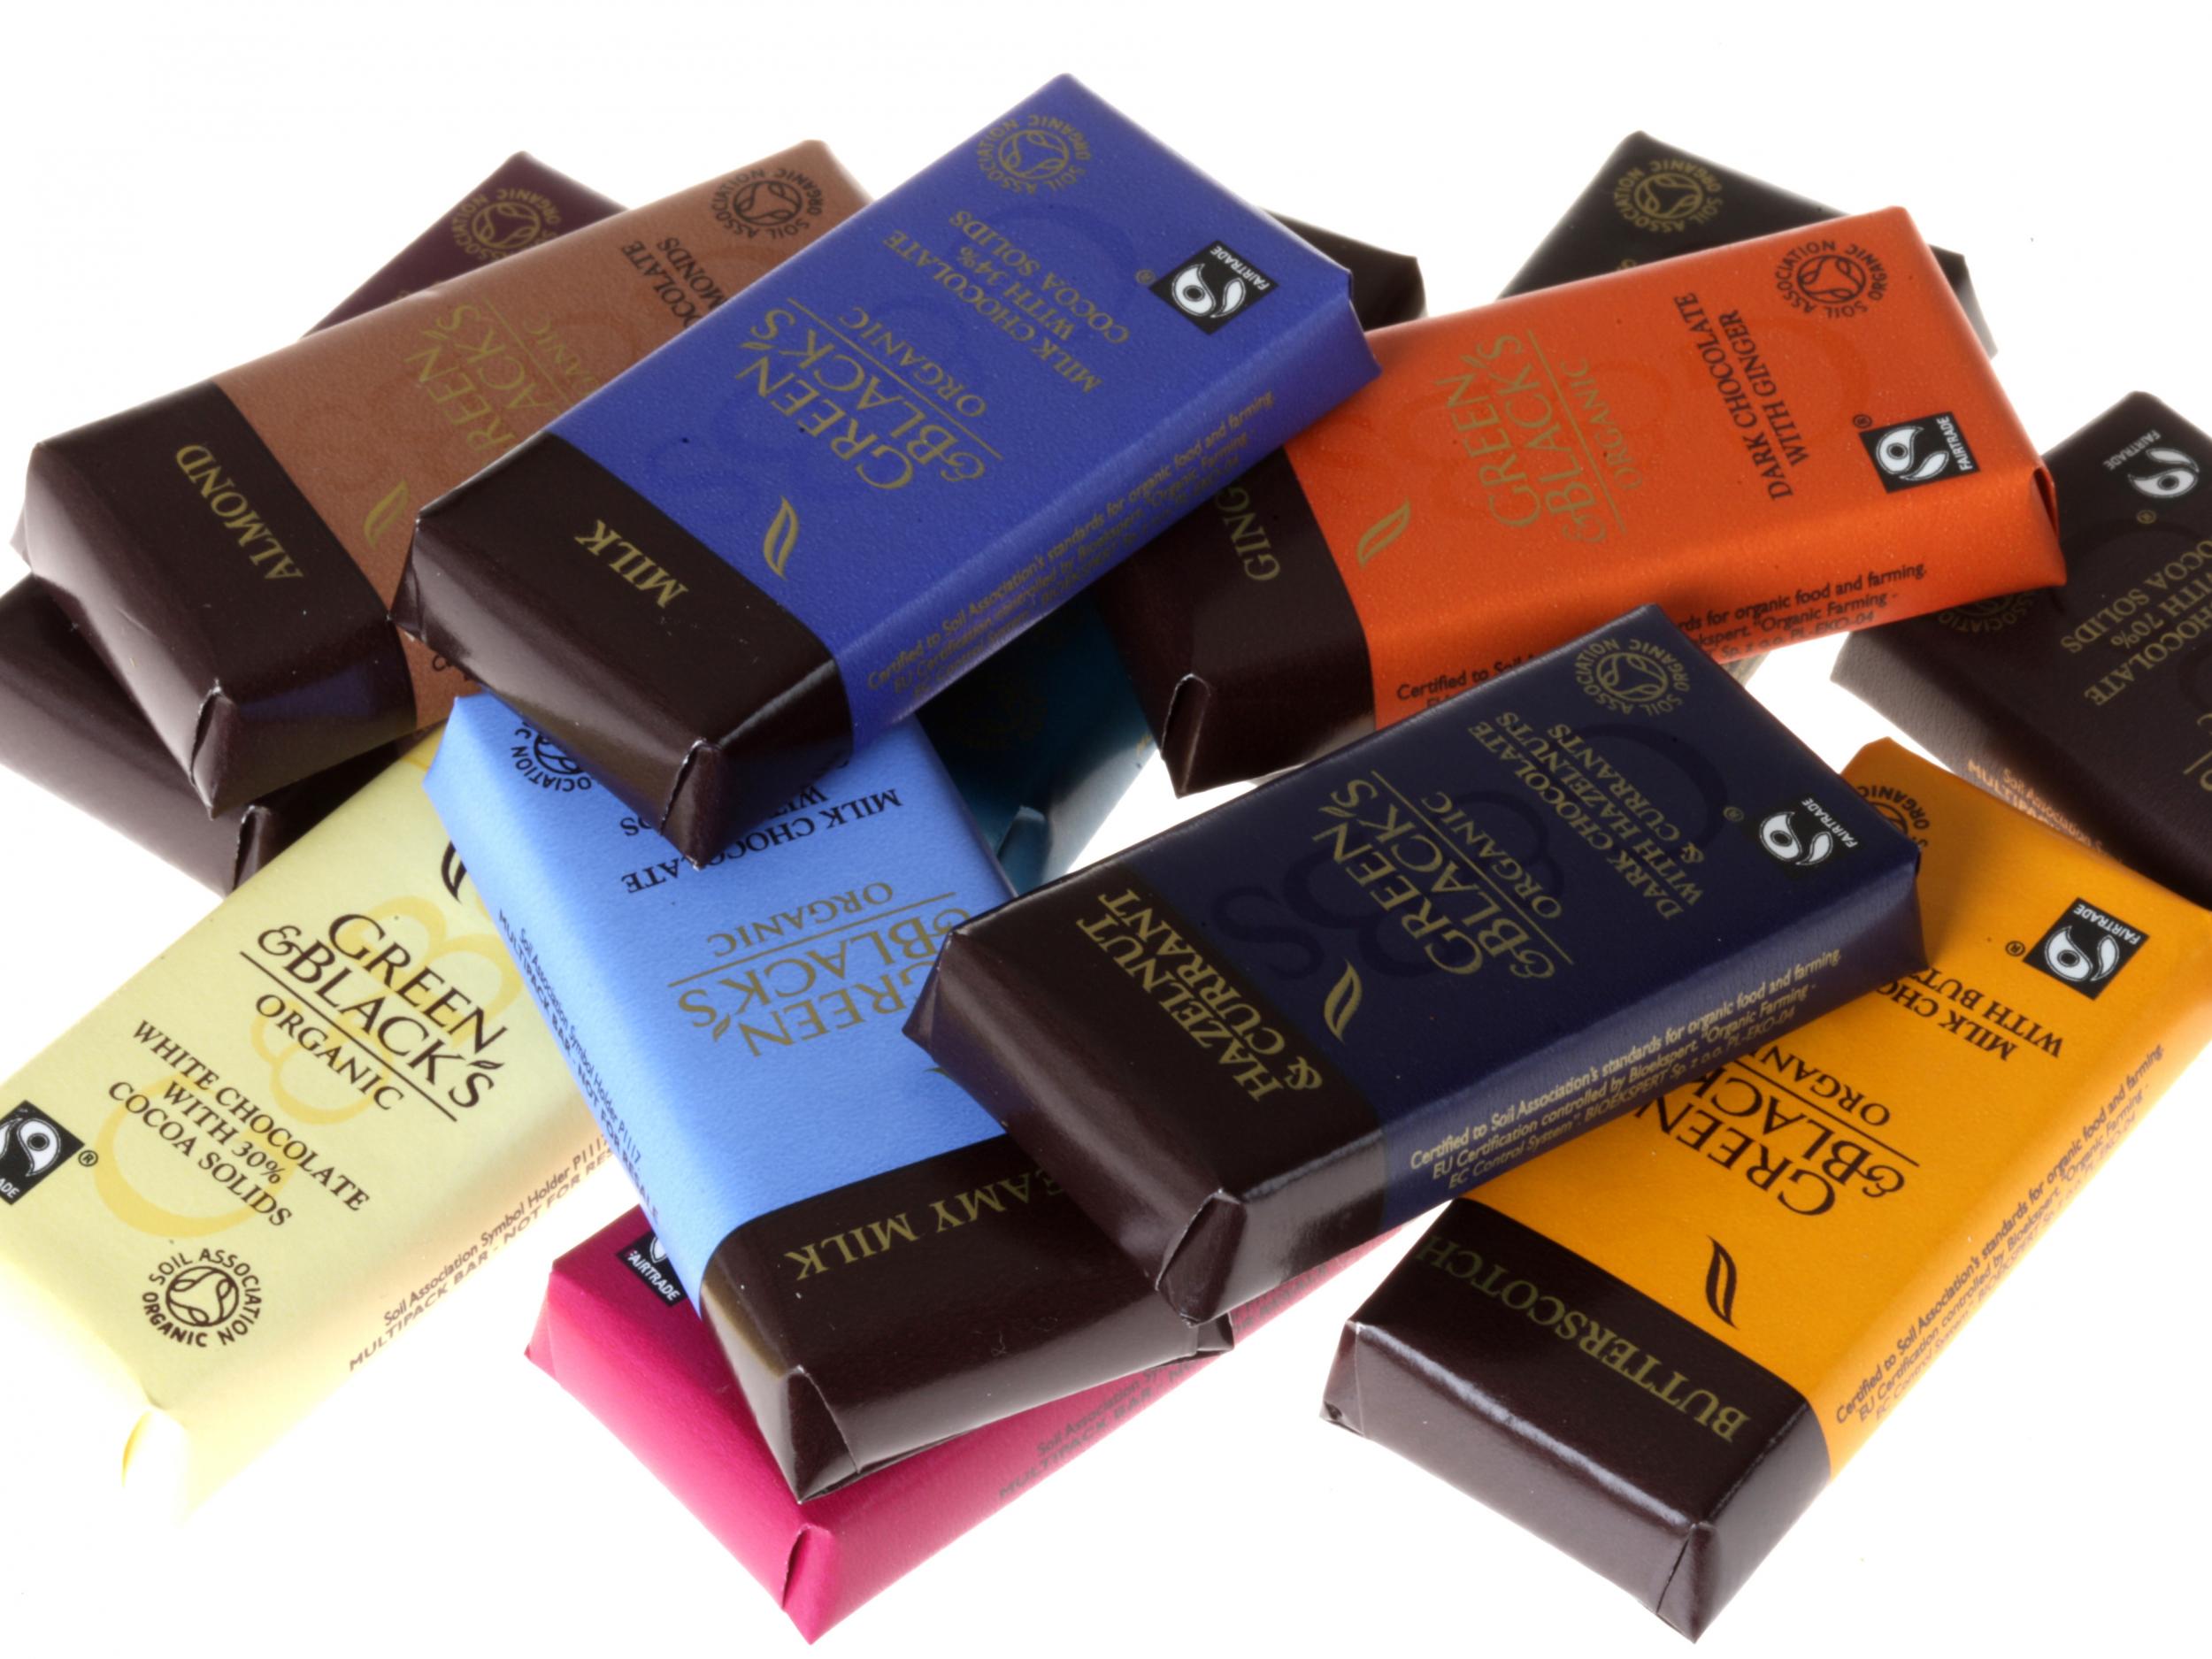 Green & Blacks chocolate is owned by Mondelez International